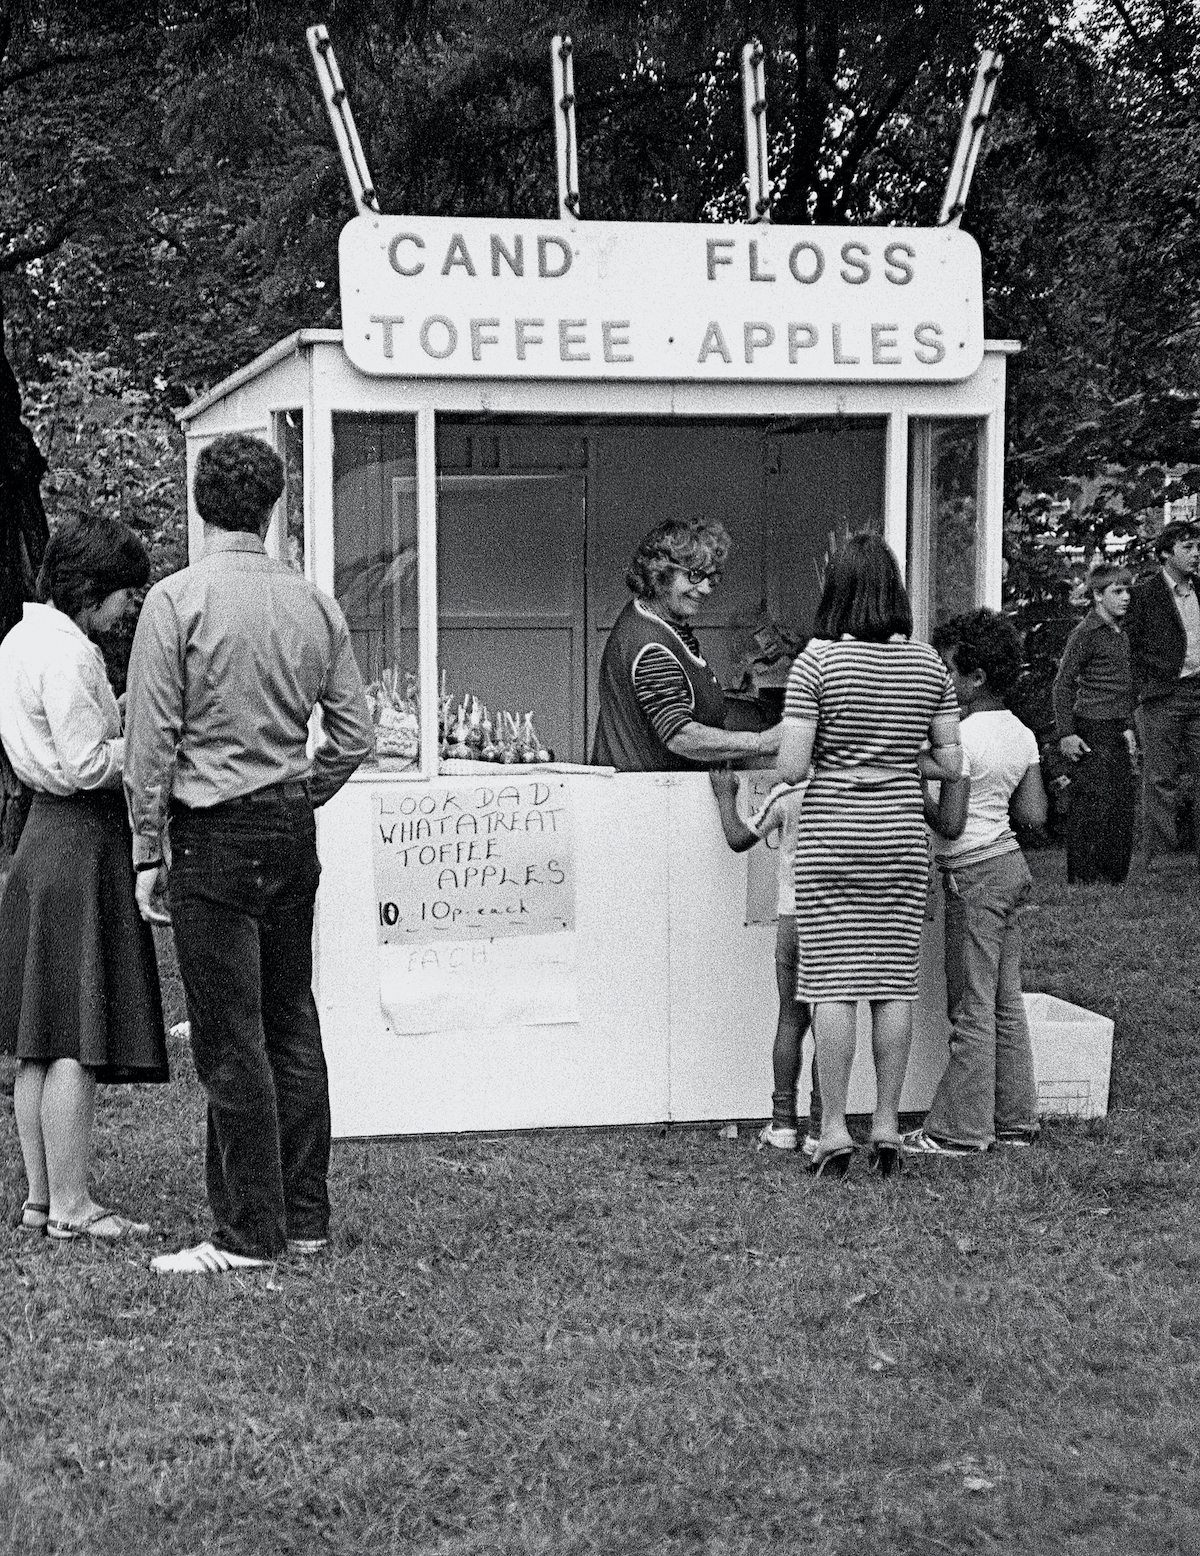 Stoke Newington Common Festival 1978